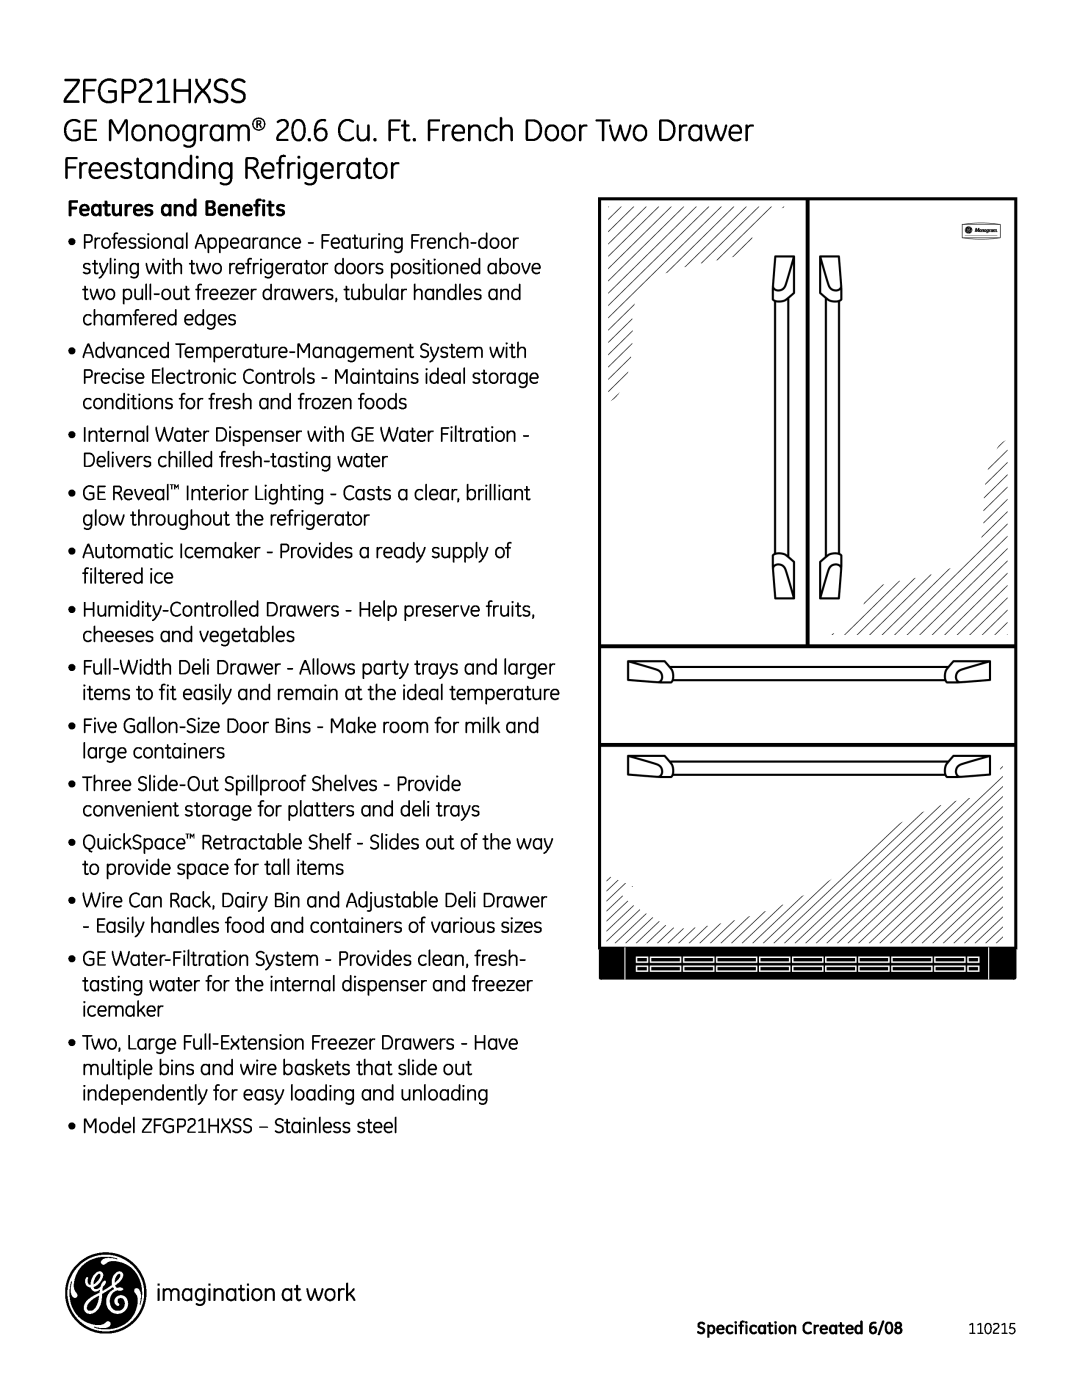 GE Monogram ZFGP21HXSS Features and Benefits, GE Monogram 20.6 Cu. Ft. French Door Two Drawer, Freestanding Refrigerator 